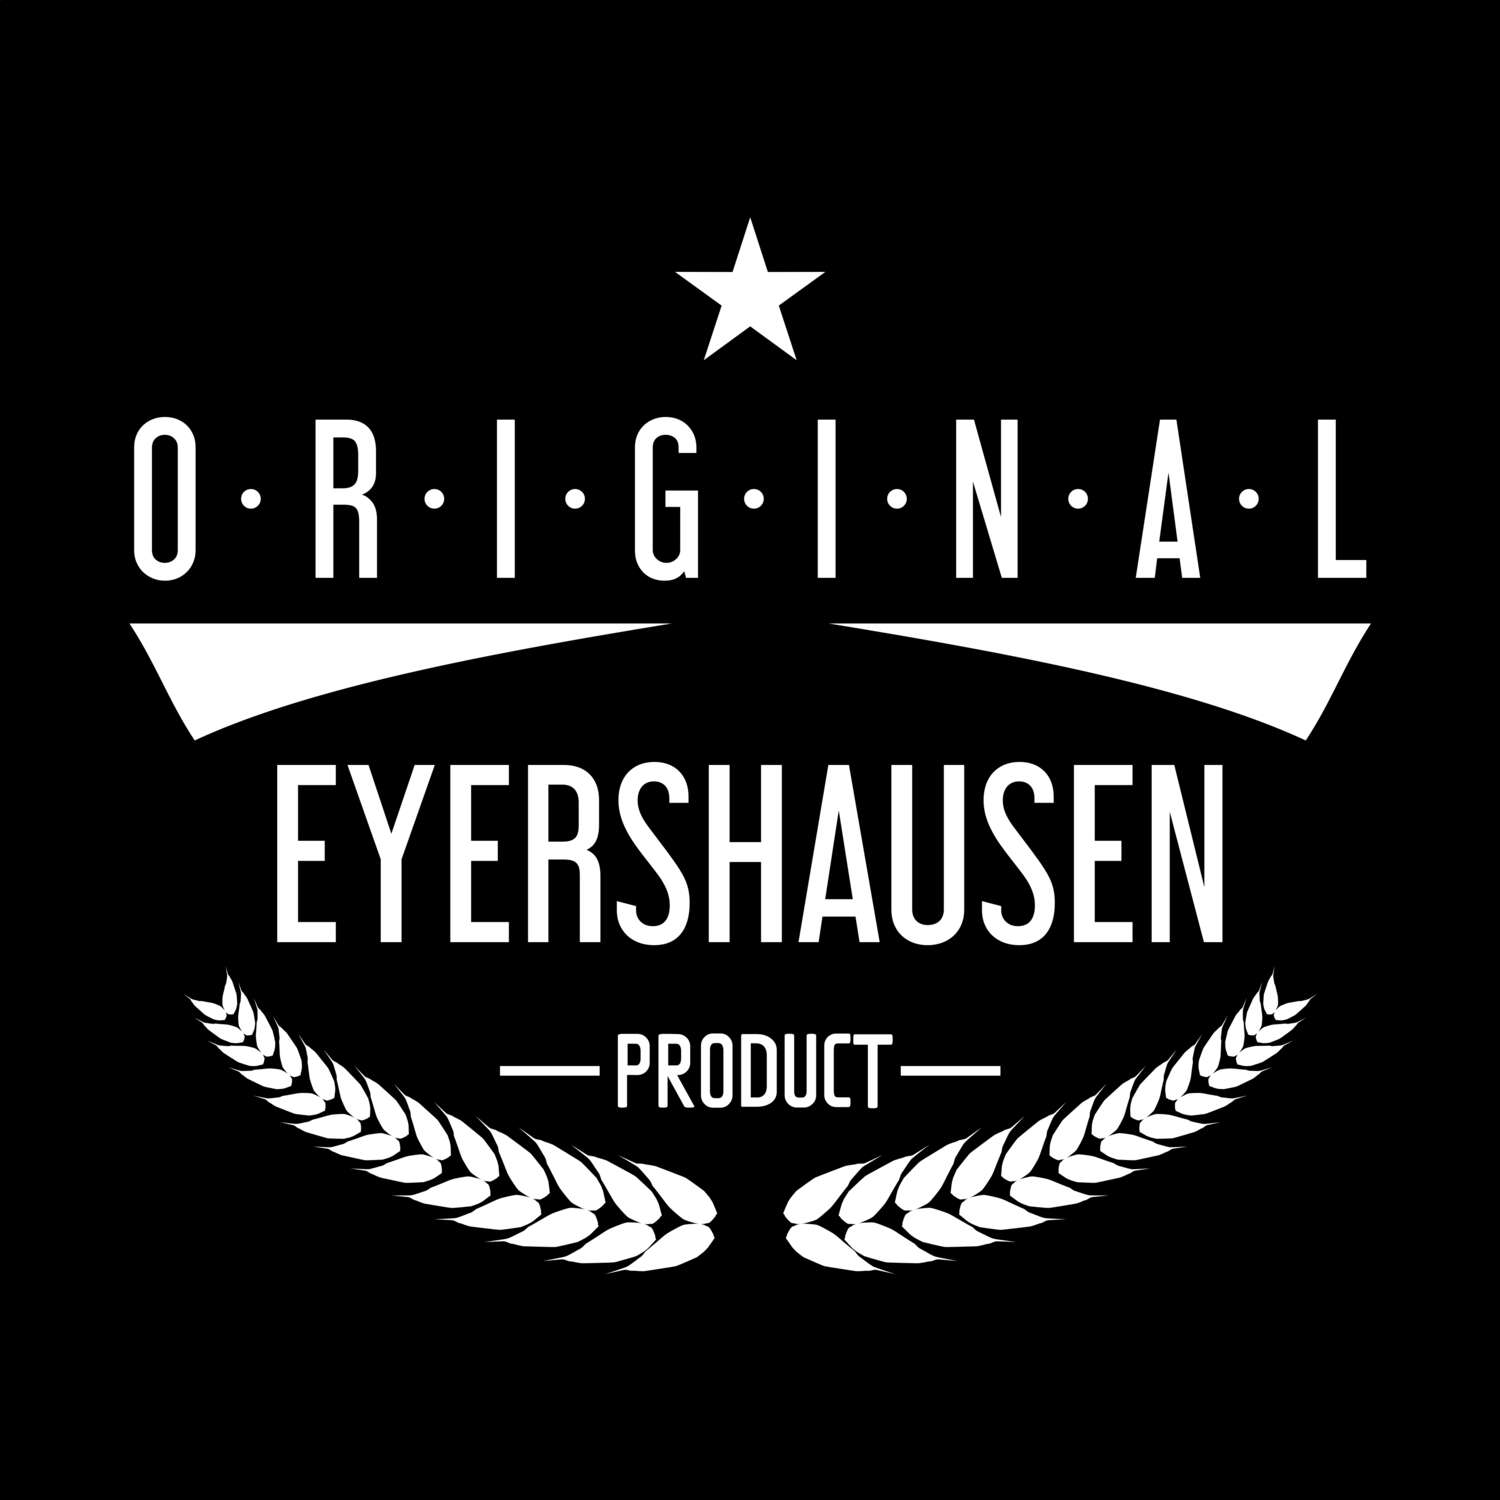 Eyershausen T-Shirt »Original Product«